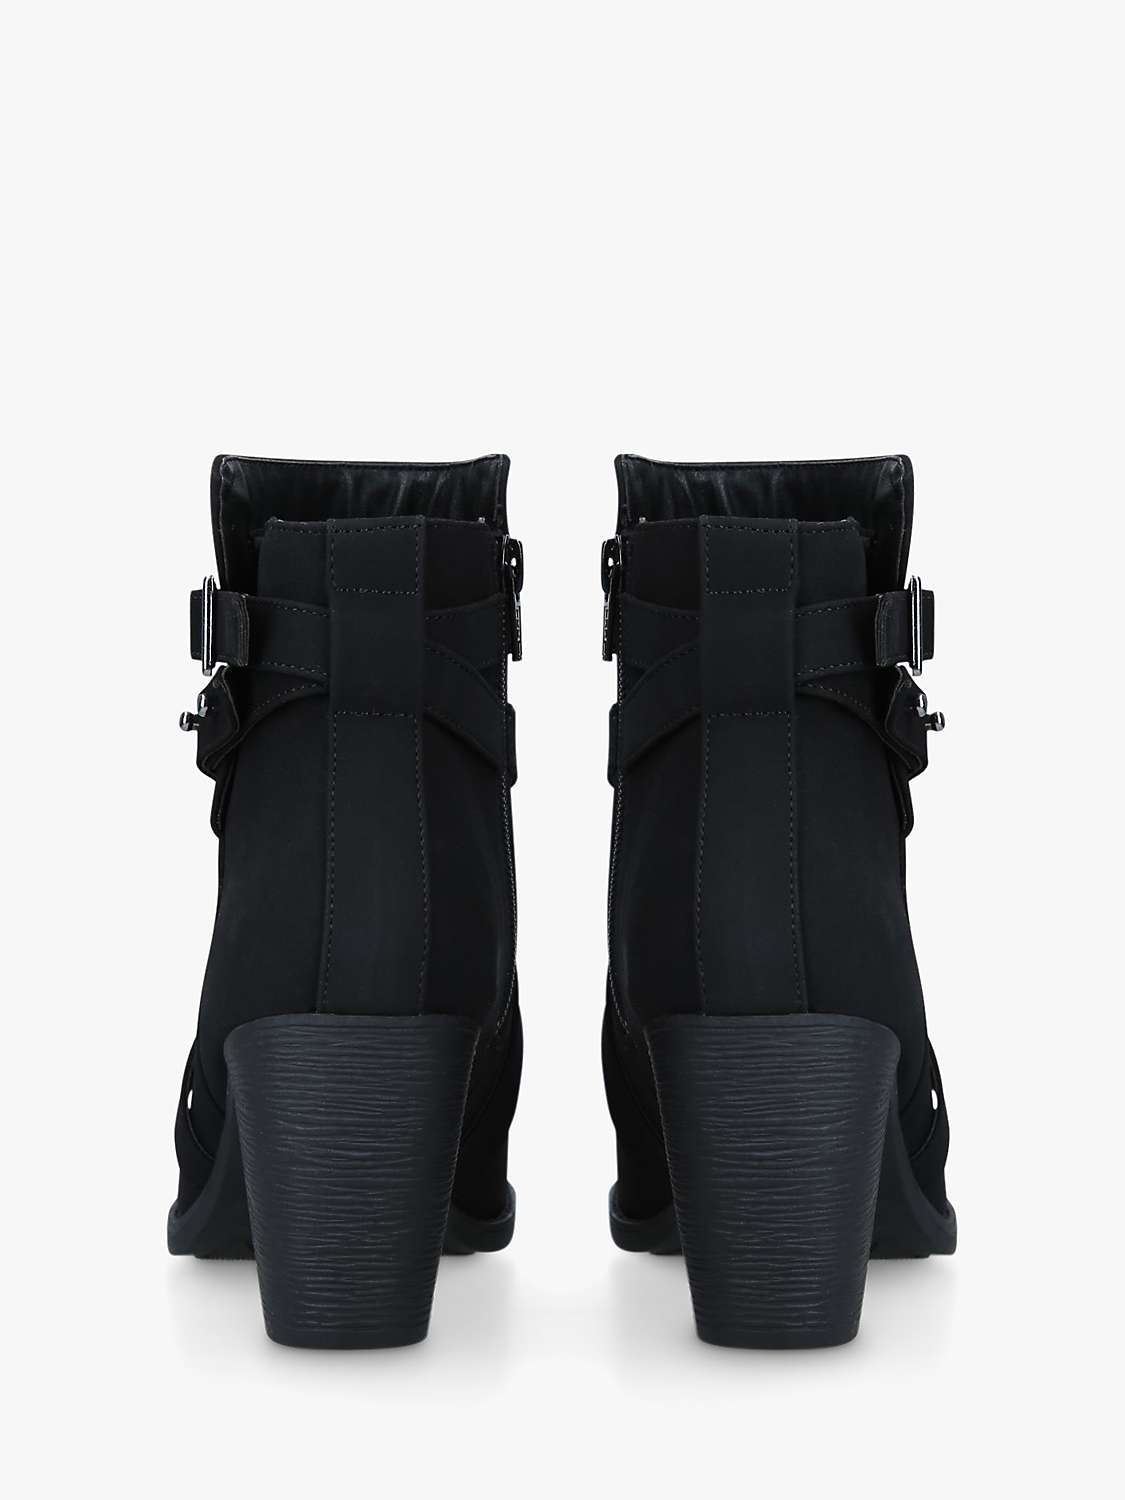 Buy Carvela Comfort Tara Block Heel Ankle Boots, Black Online at johnlewis.com